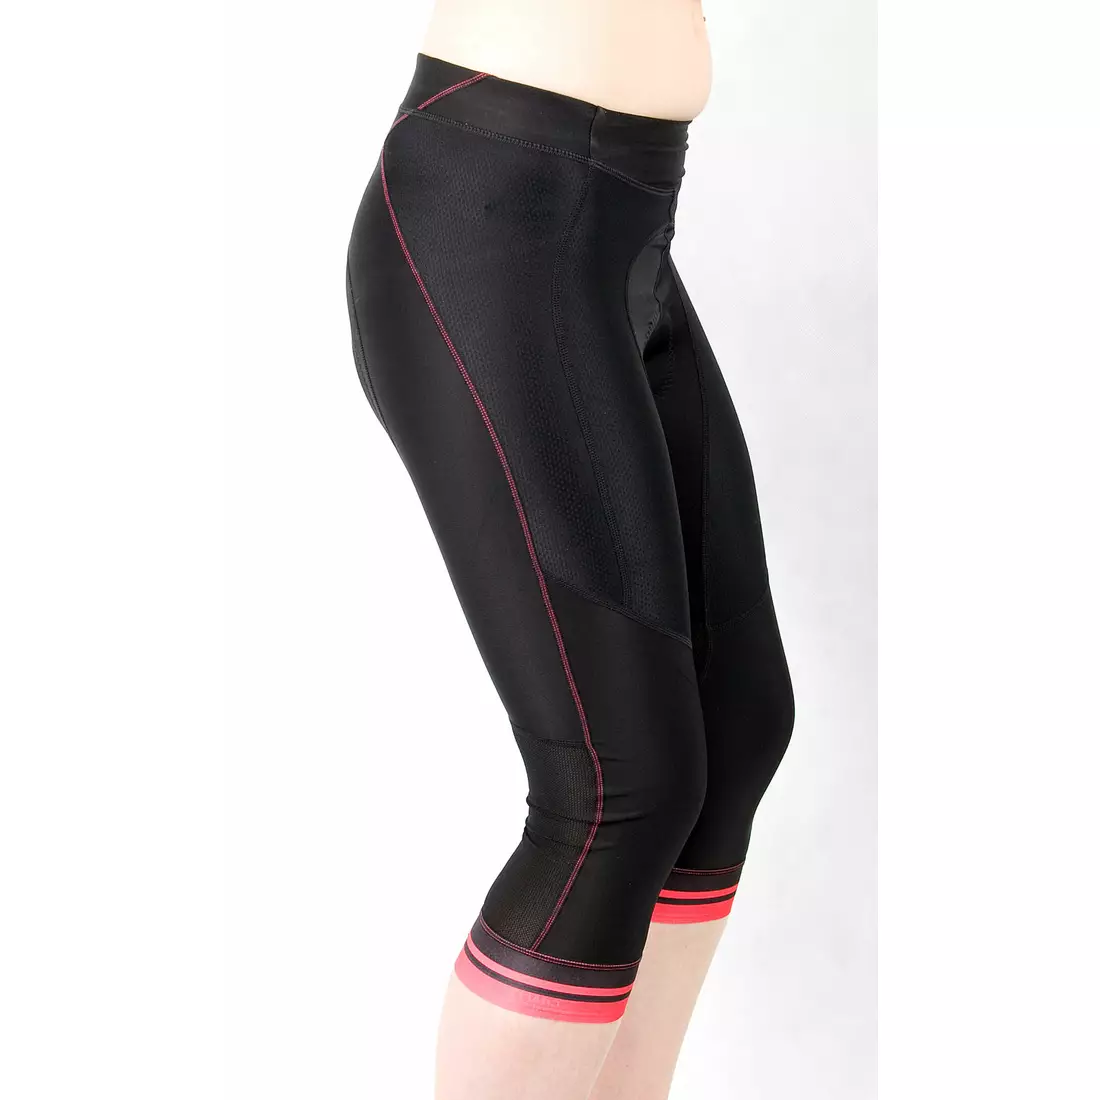 CRAFT Performance Knicker women's cycling shorts, 3/4 leg 1902573-9477